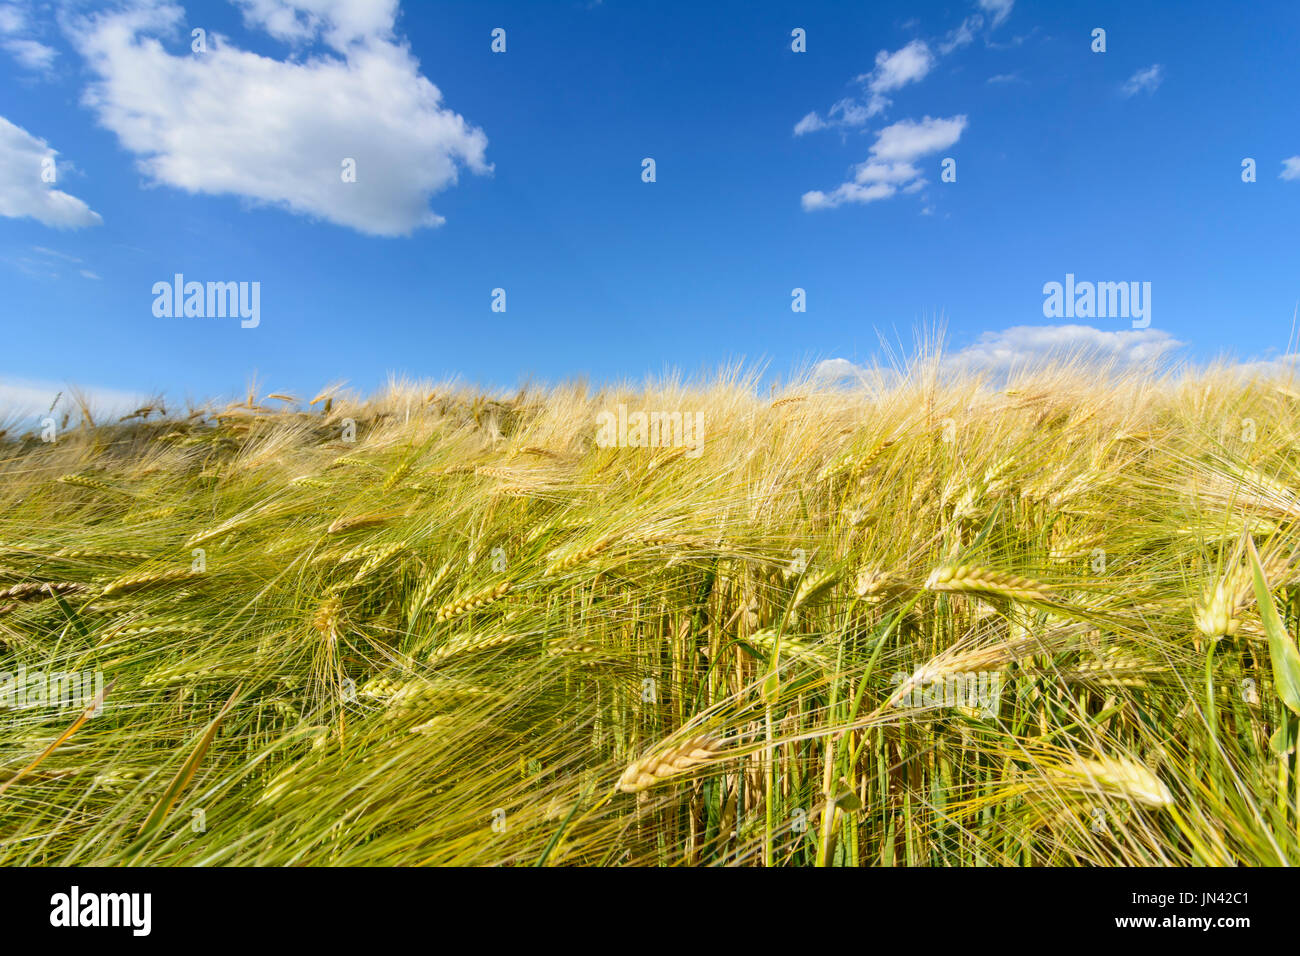 Raccolto di orzo campo di cereali, cielo blu e nuvole, Judenau-Baumgarten, Wienerwald, Vienna Woods, Niederösterreich, Austria Inferiore, Austria Foto Stock